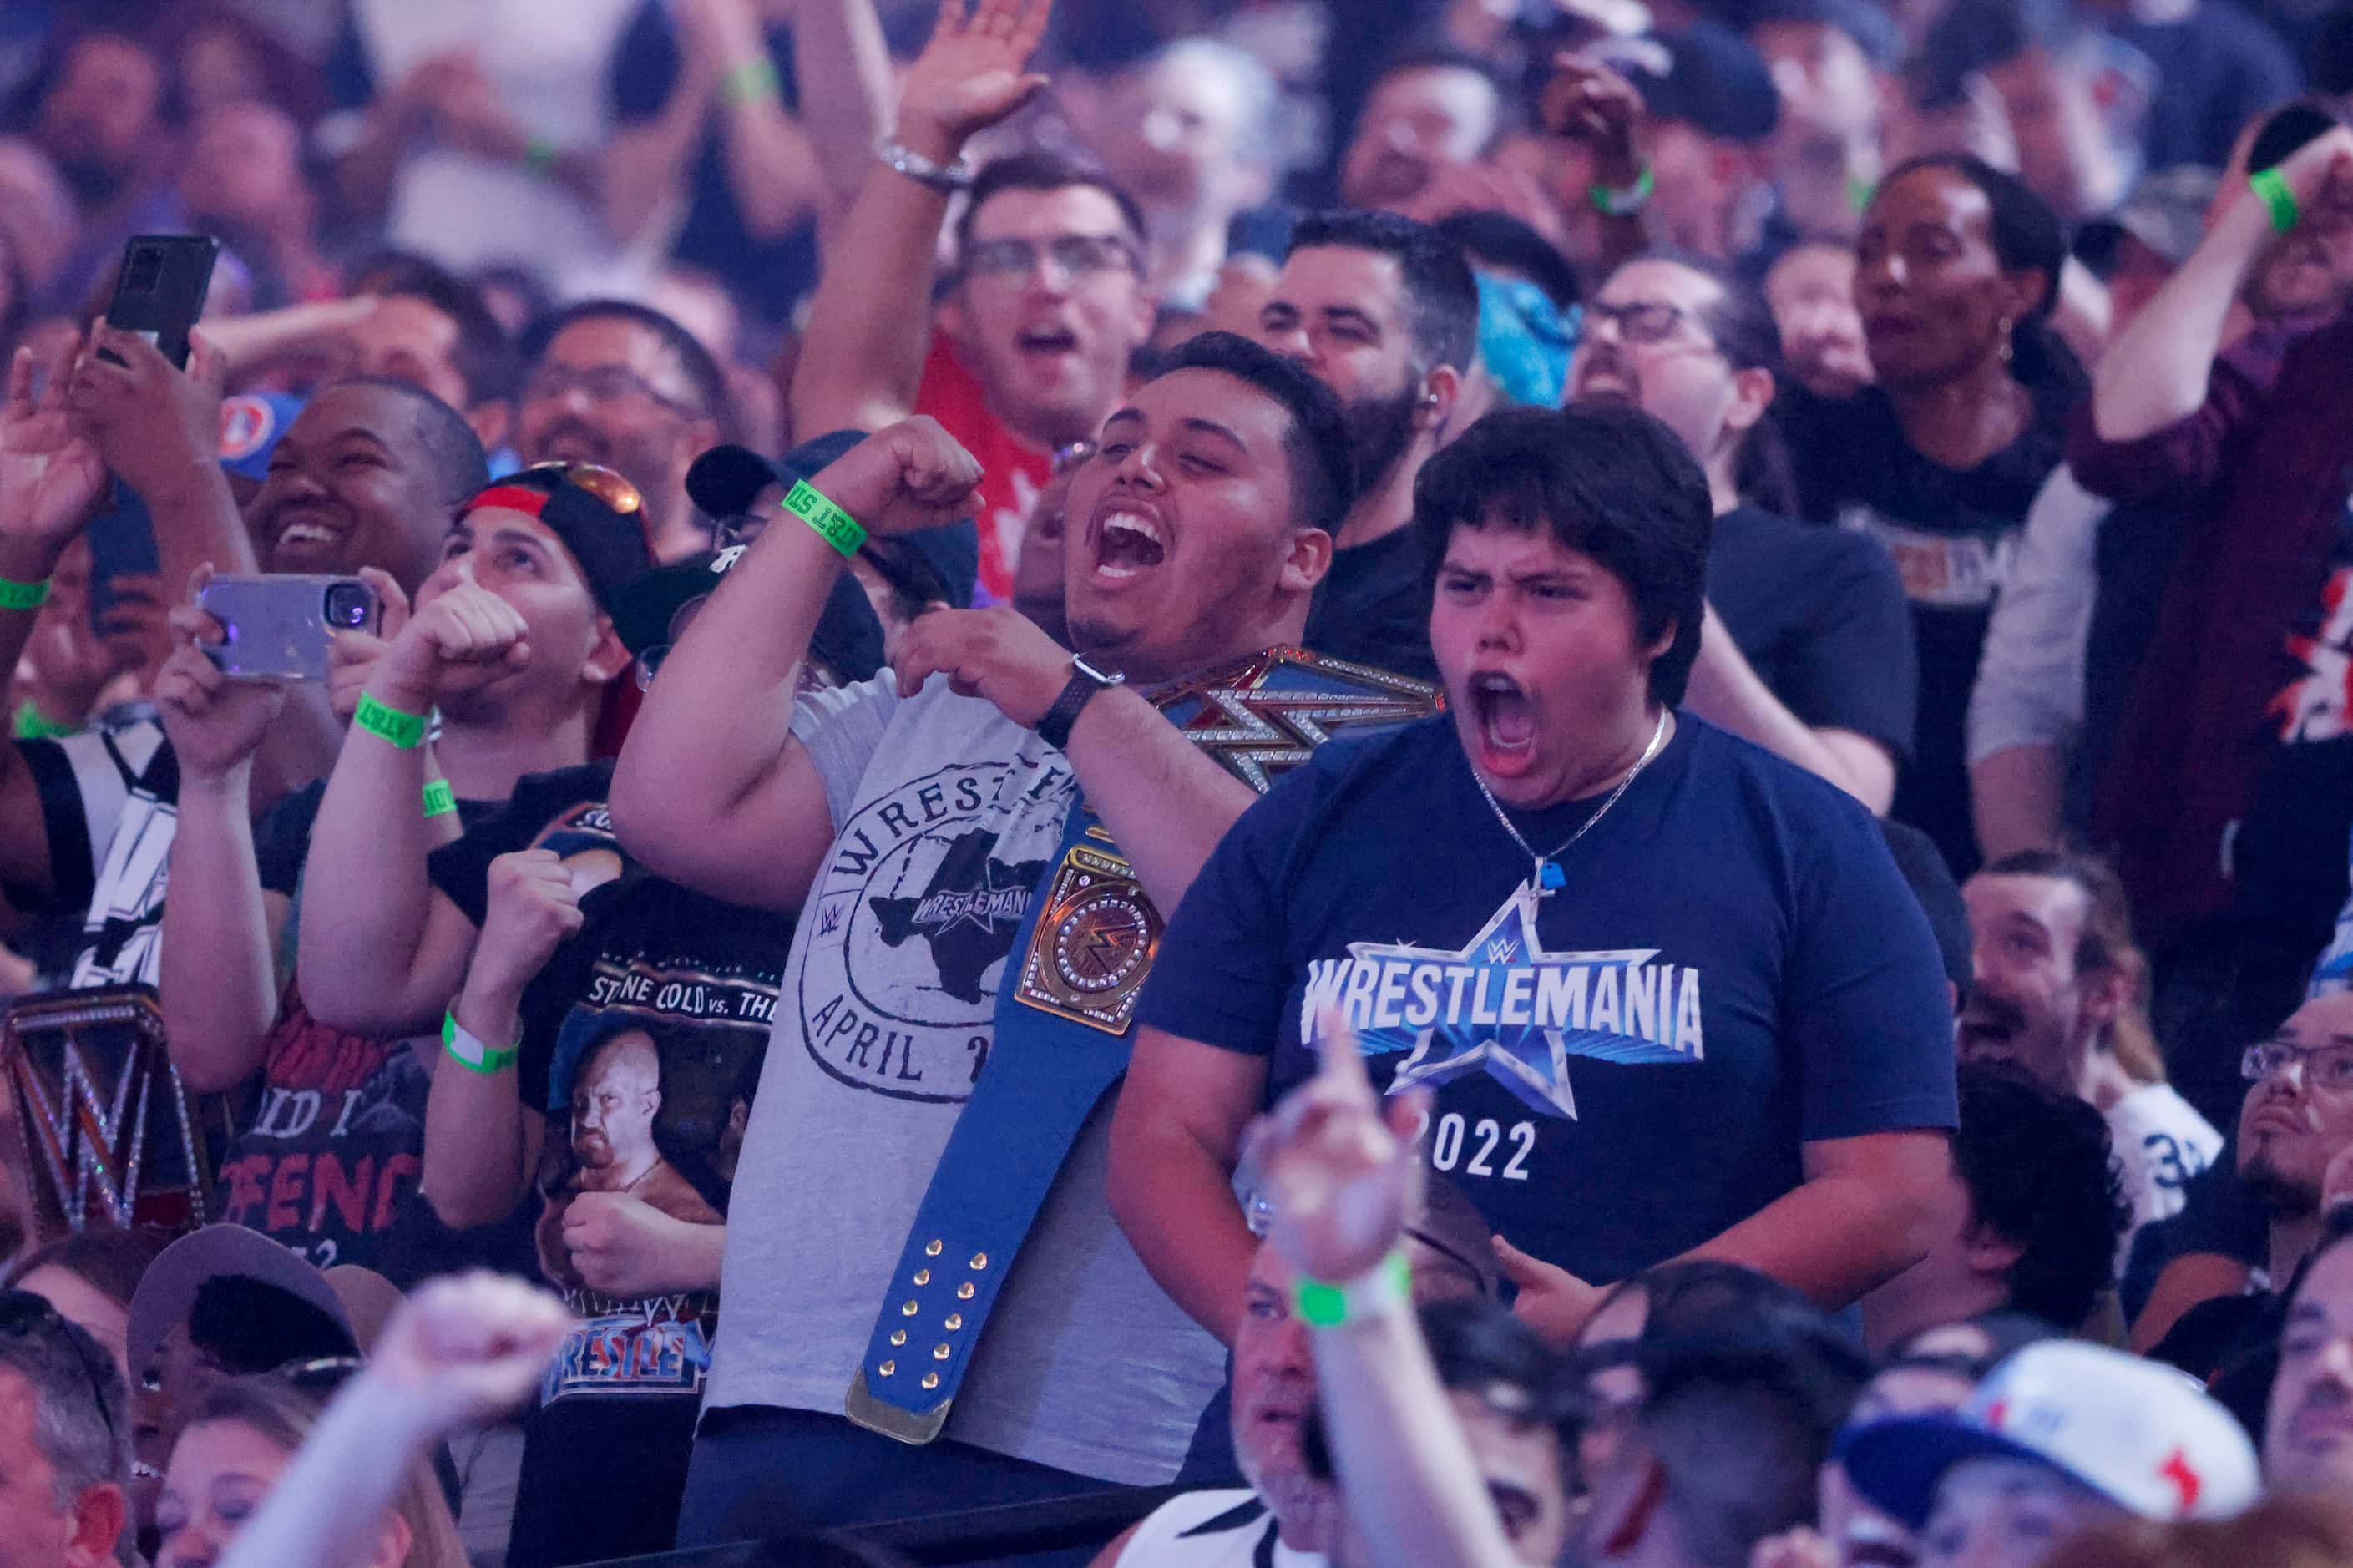 Fans cheer during WrestleMania in Arlington, Texas on Saturday, April 2, 2022. 